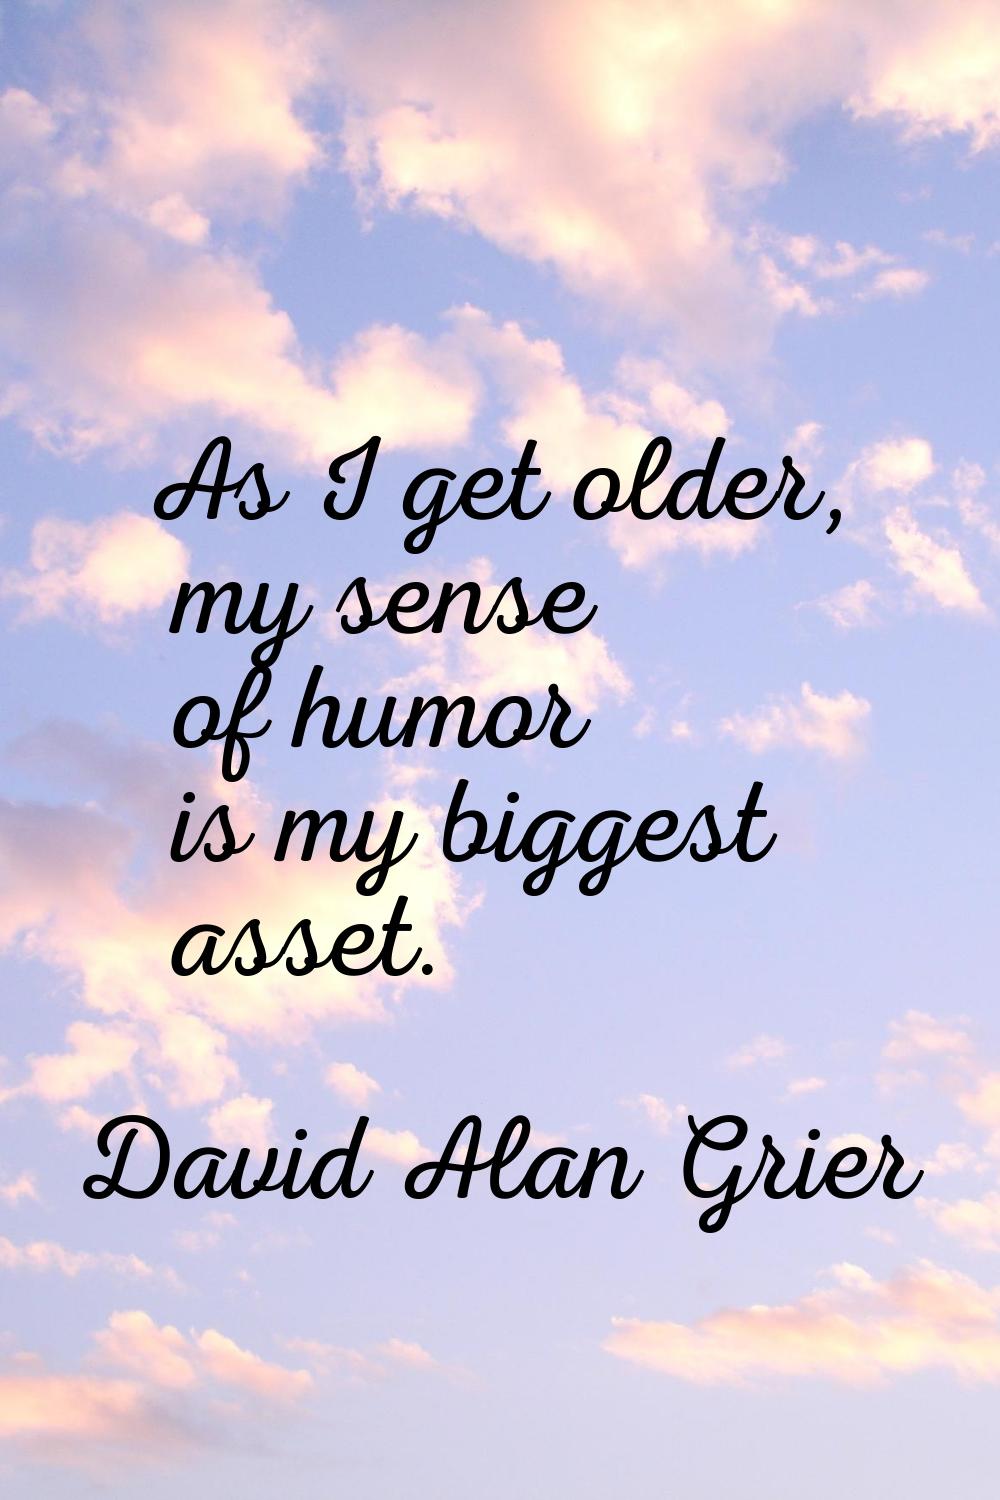 As I get older, my sense of humor is my biggest asset.